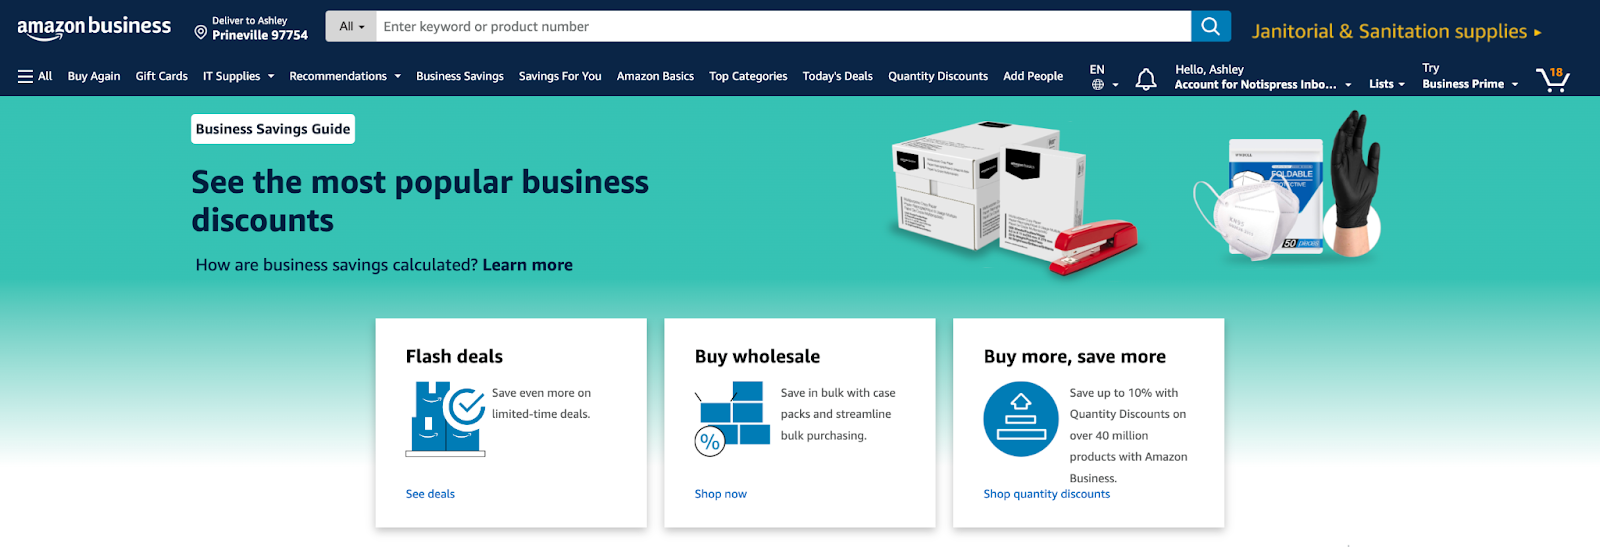 Amazon Business Prime account